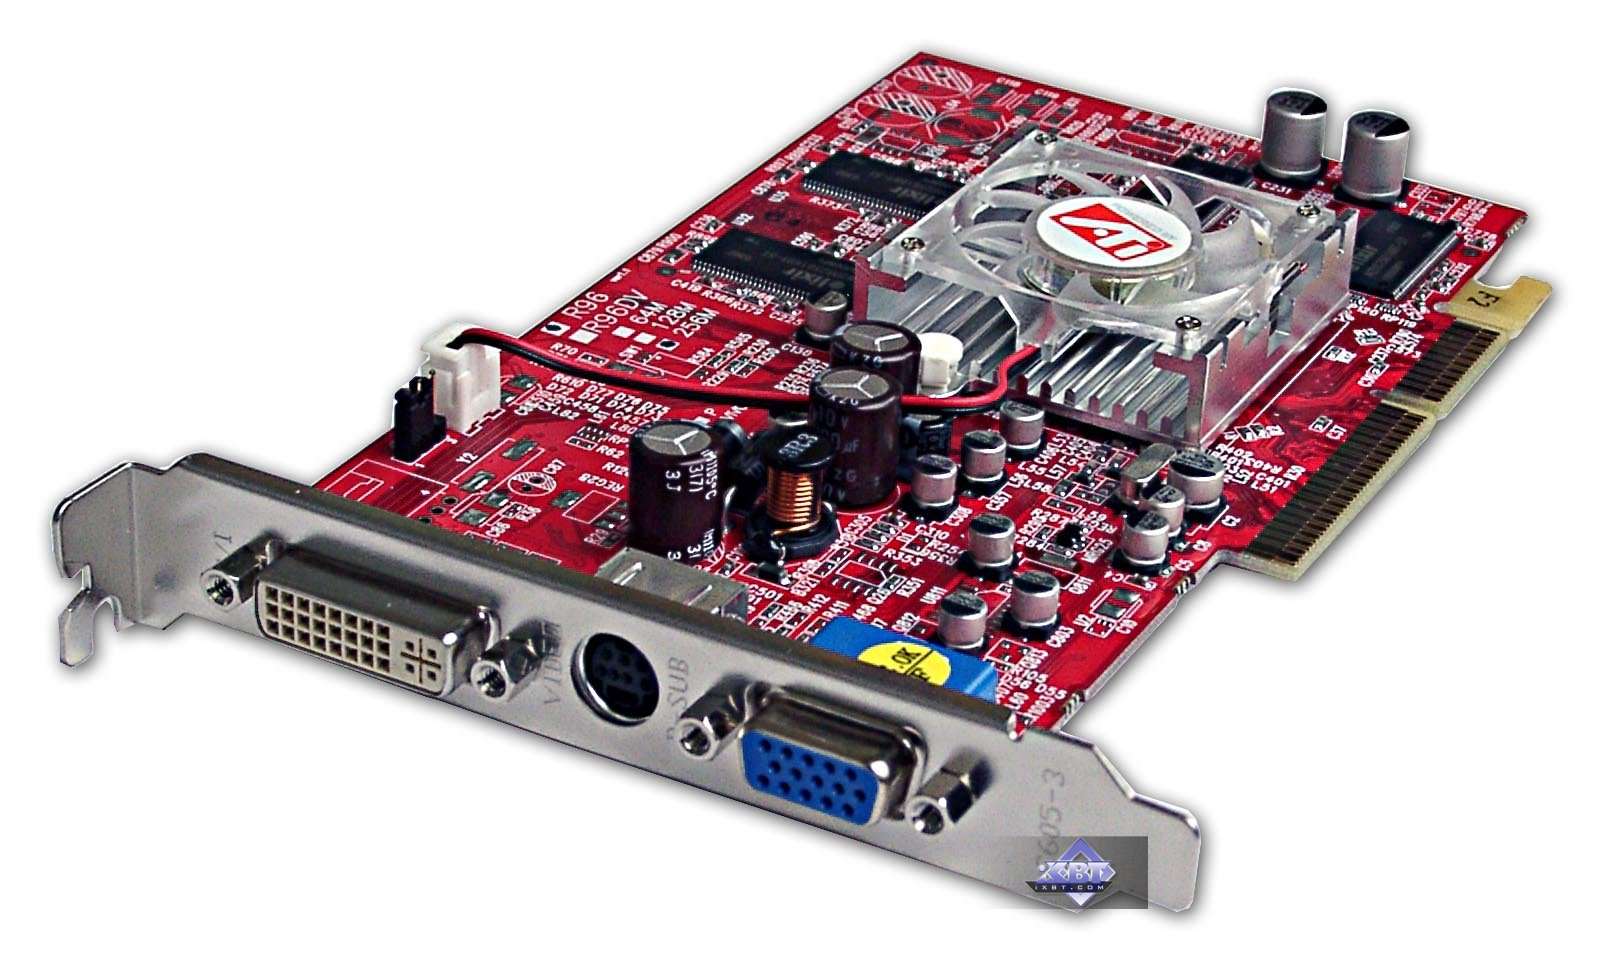 Ati radeon 9600. Видеокарта ATI Radeon 9600 Pro. ATI Radeon 9600 Pro 128mb. Видеокарта ATI 9600 Pro.